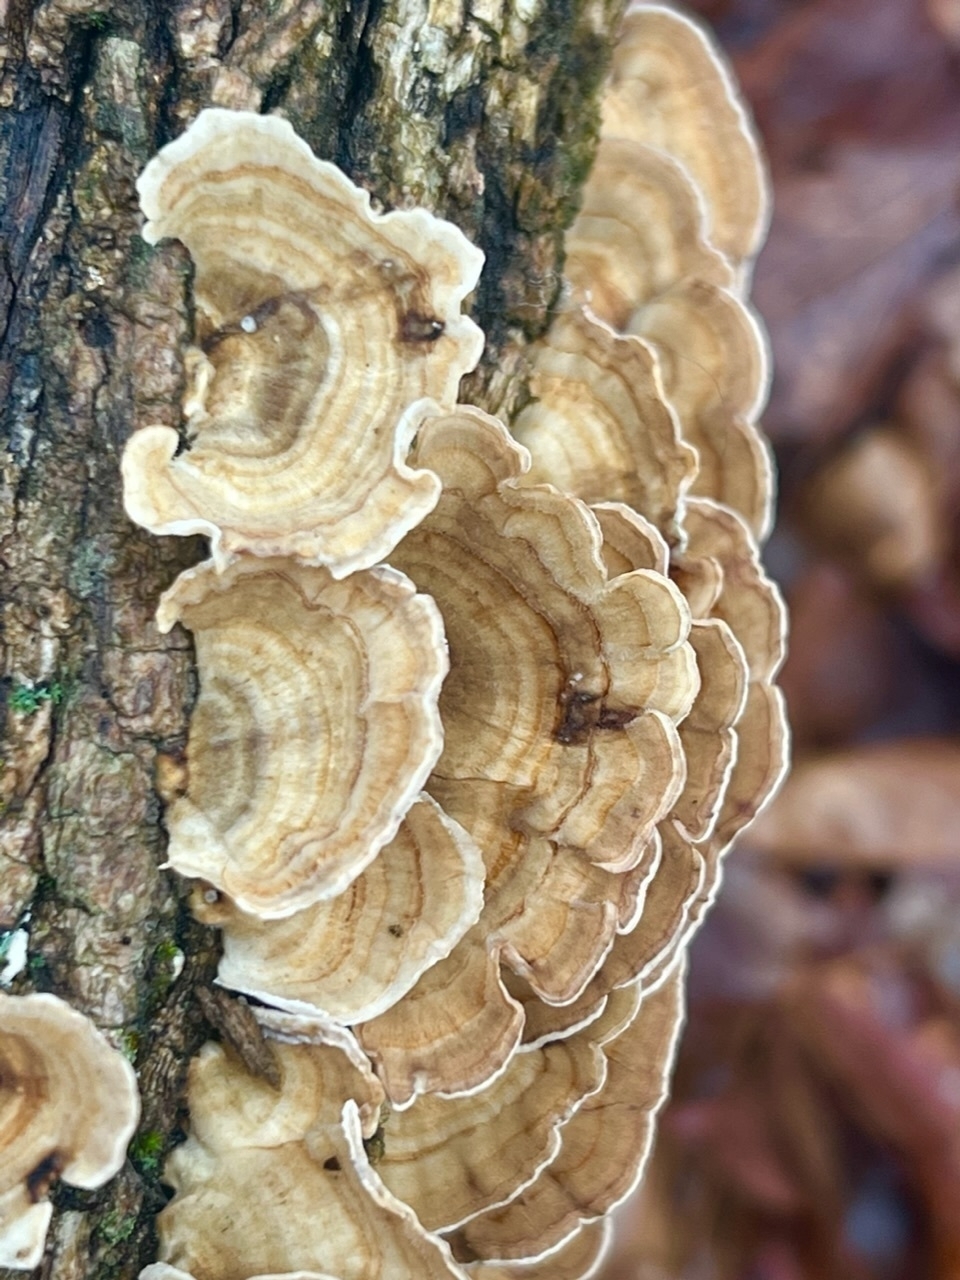 Creamy colored fungi grow on a tree